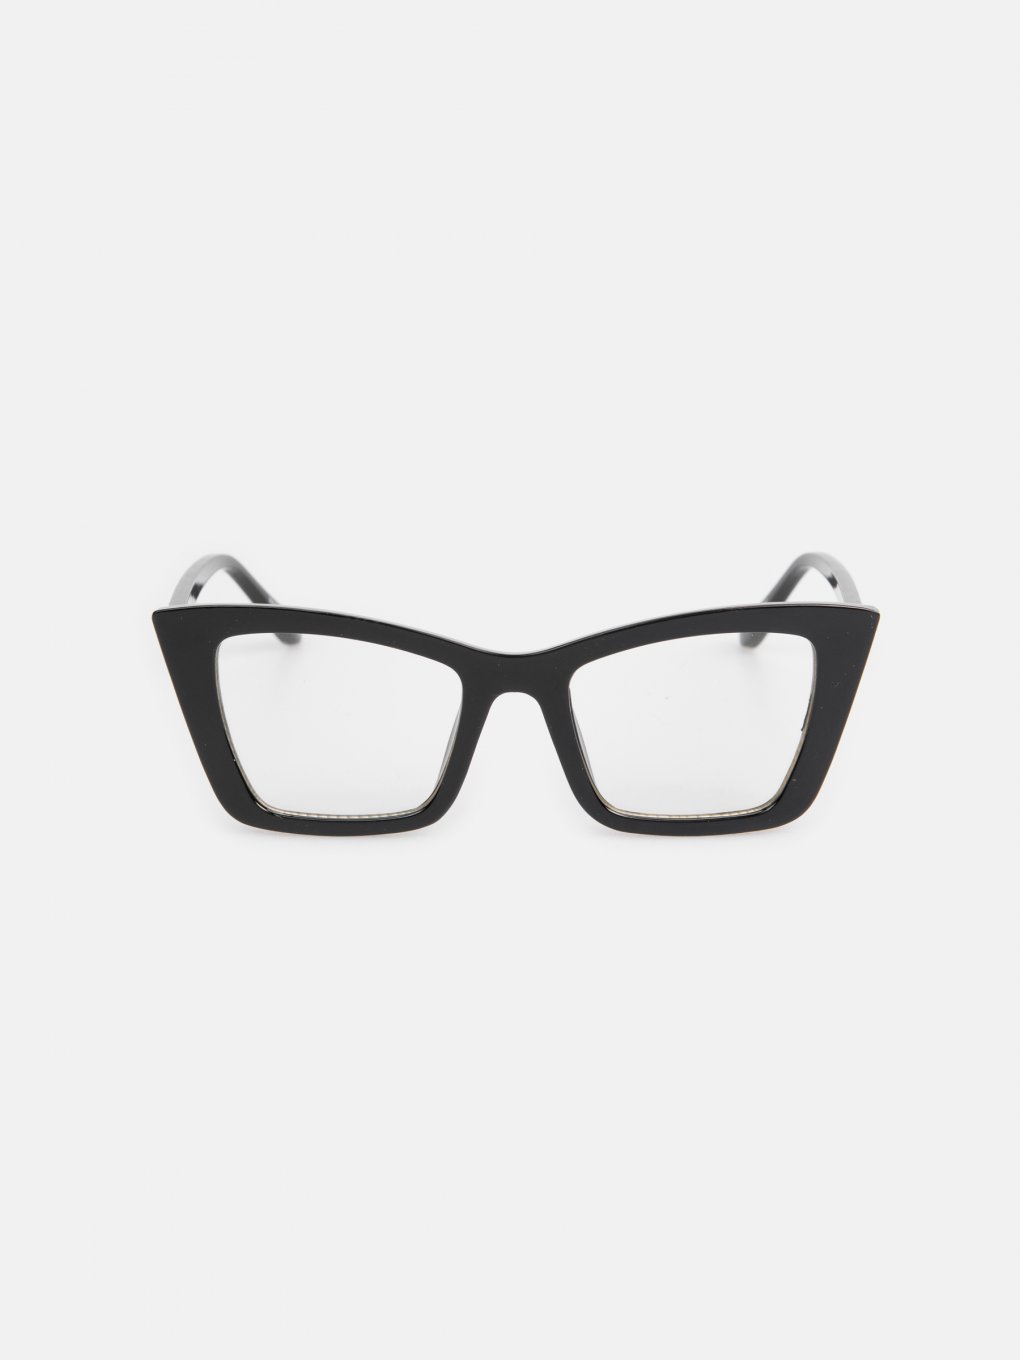 Transparent lenses glasses